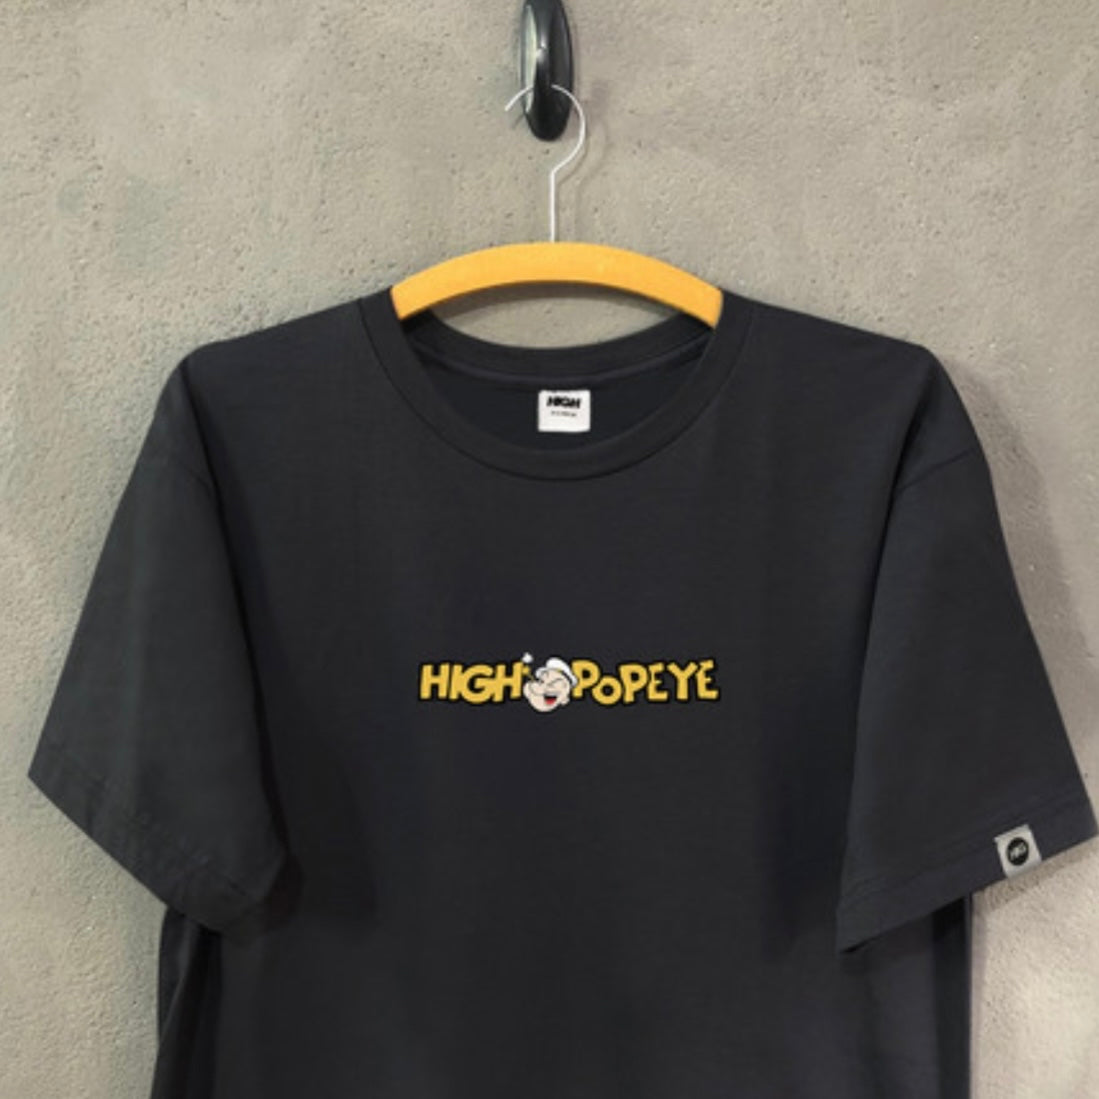 Camiseta High Company - Cachimbo Popeye